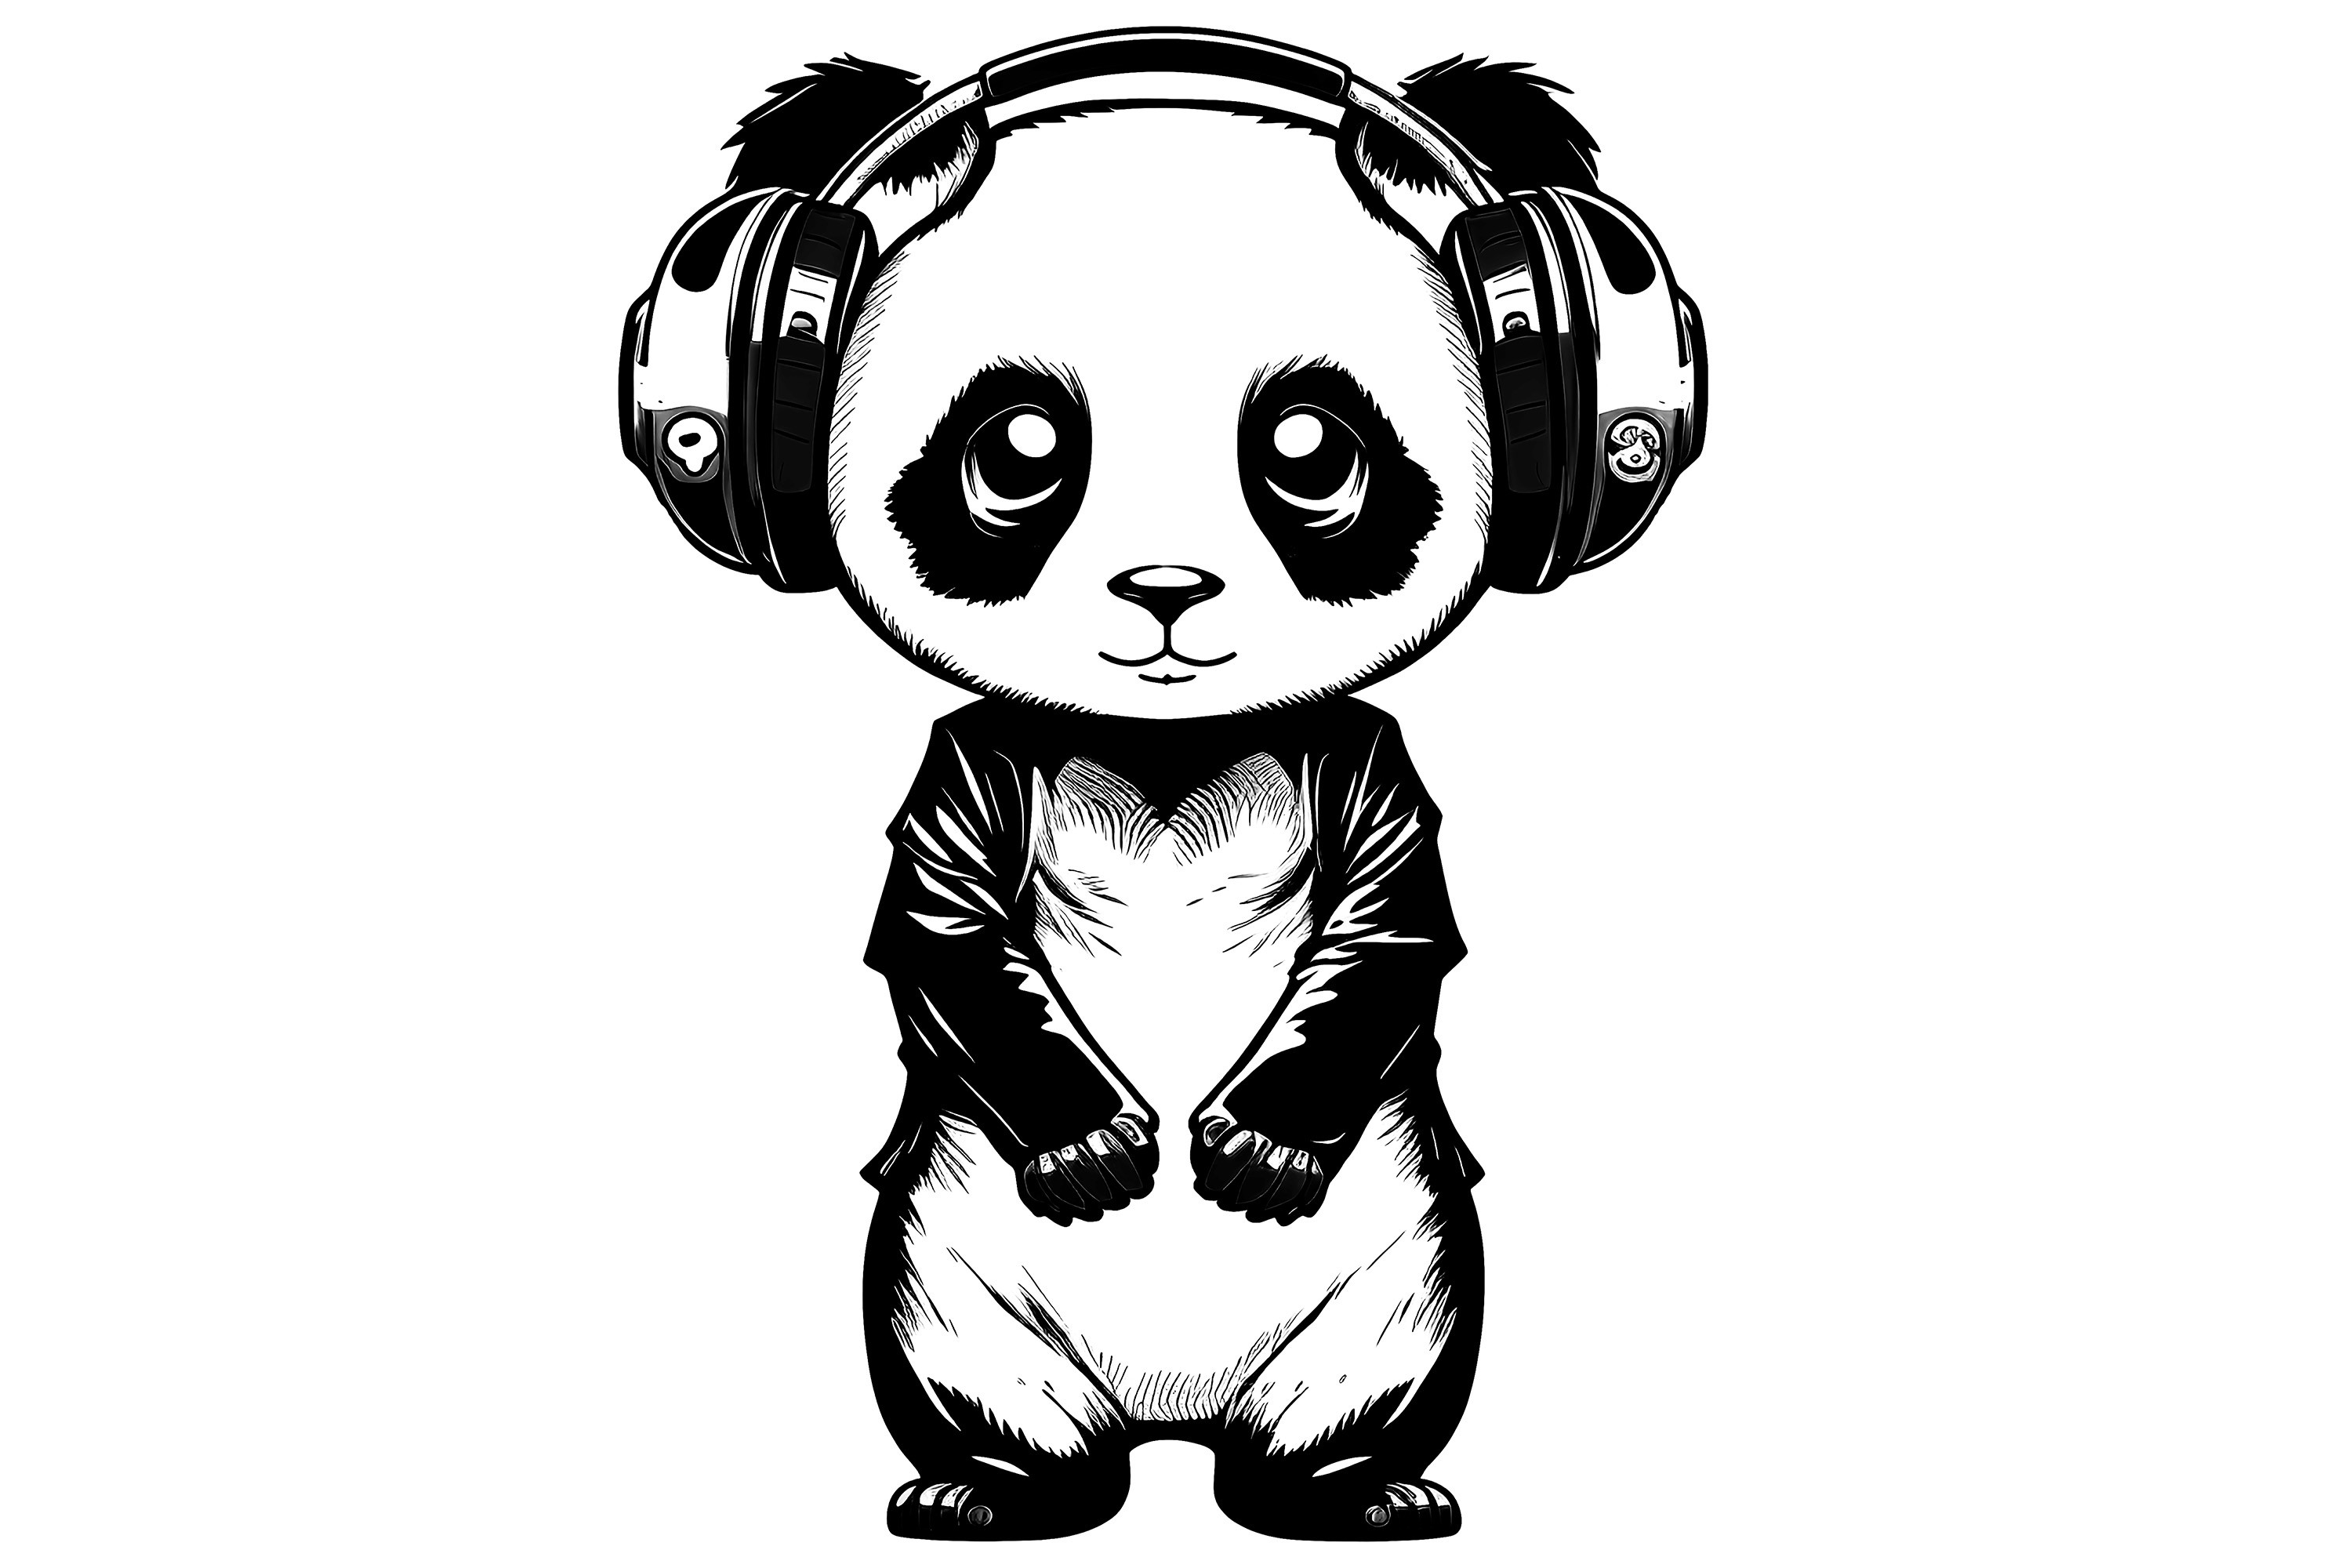 Panda Wearing Headphone Graphic by Art On Demand · Creative Fabrica